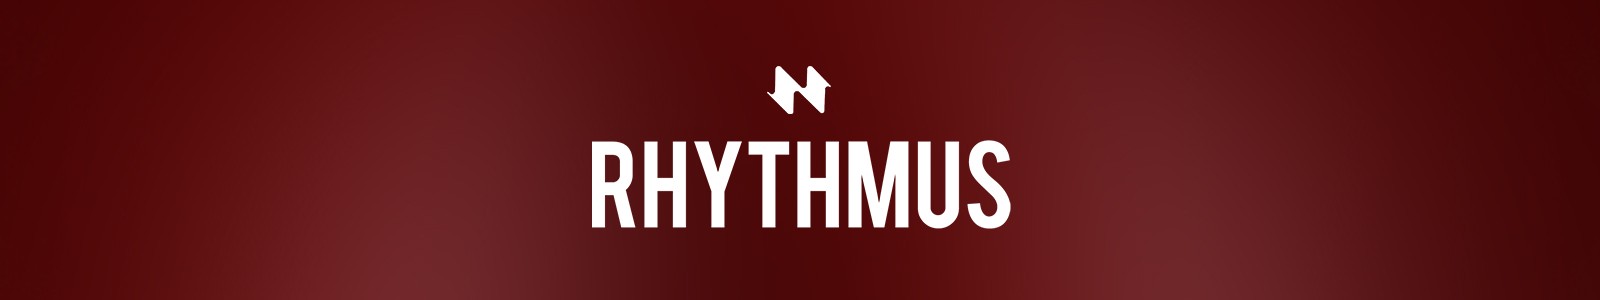 RHYTHMUS by Naroth Audio